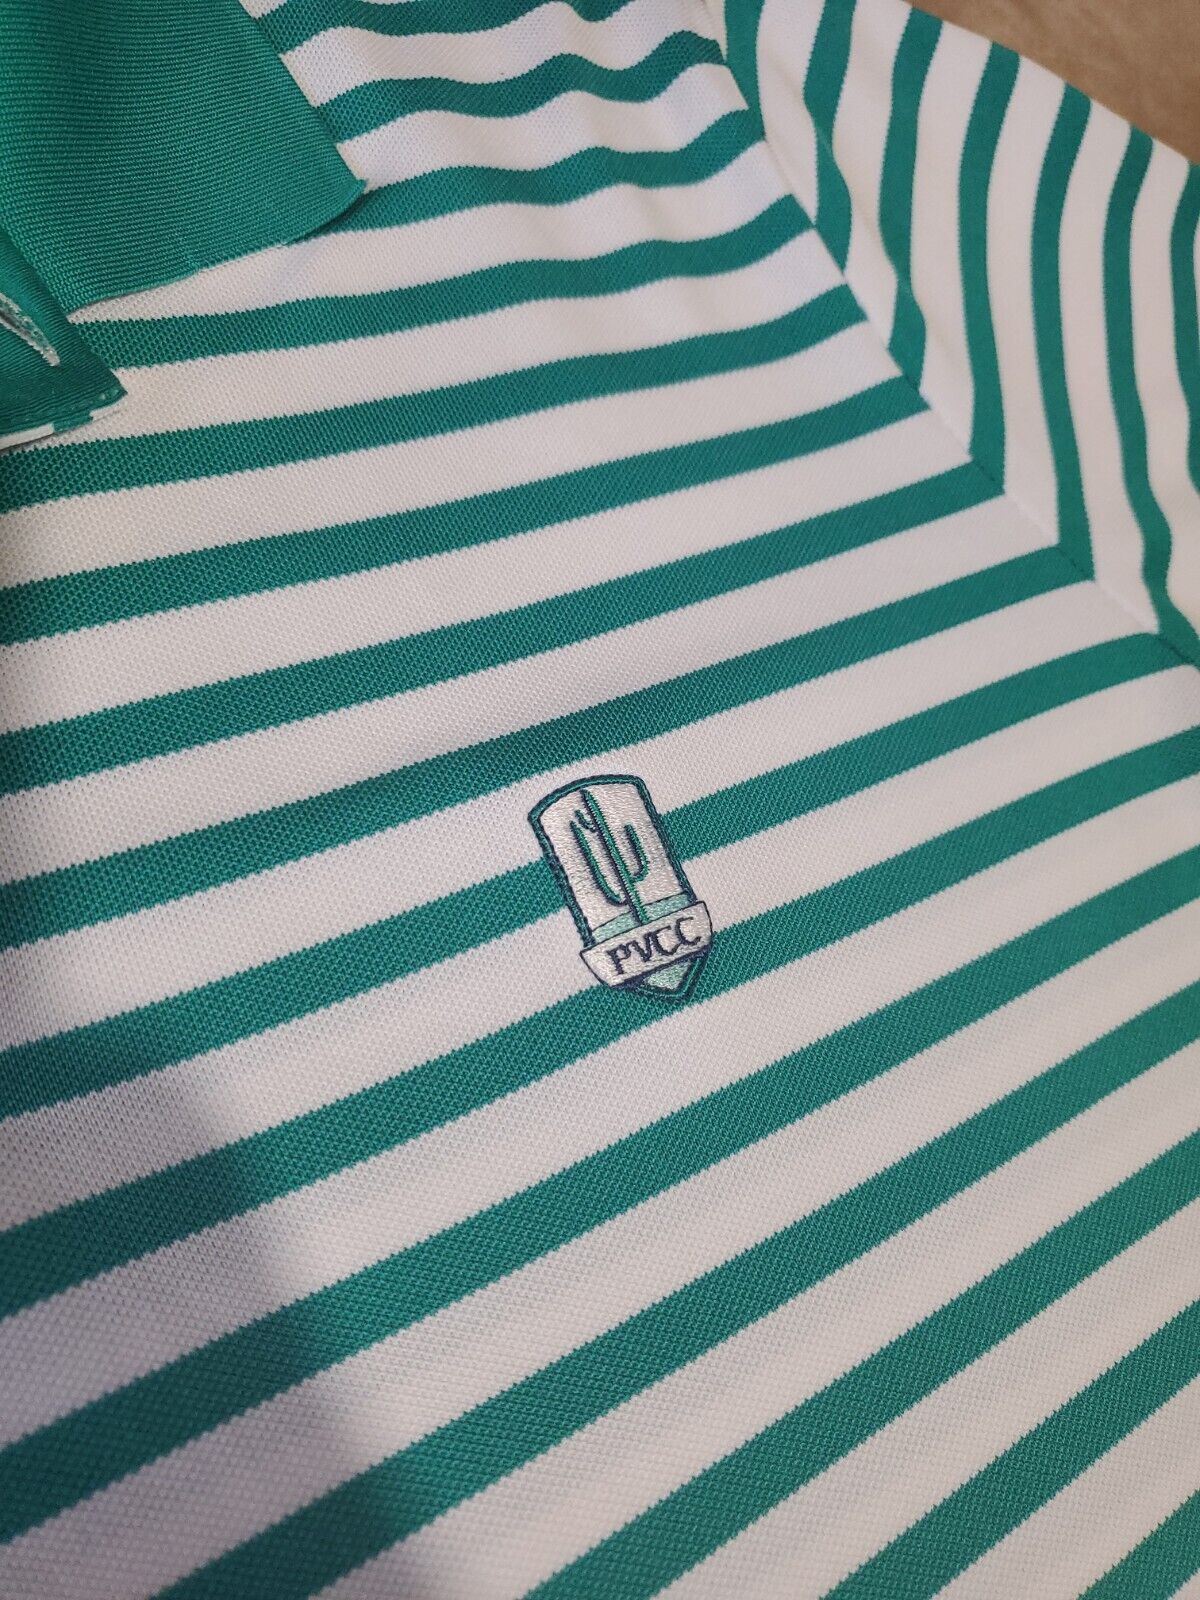 Ralph Lauren RLX mens polo shirt LARGE Green White stripe